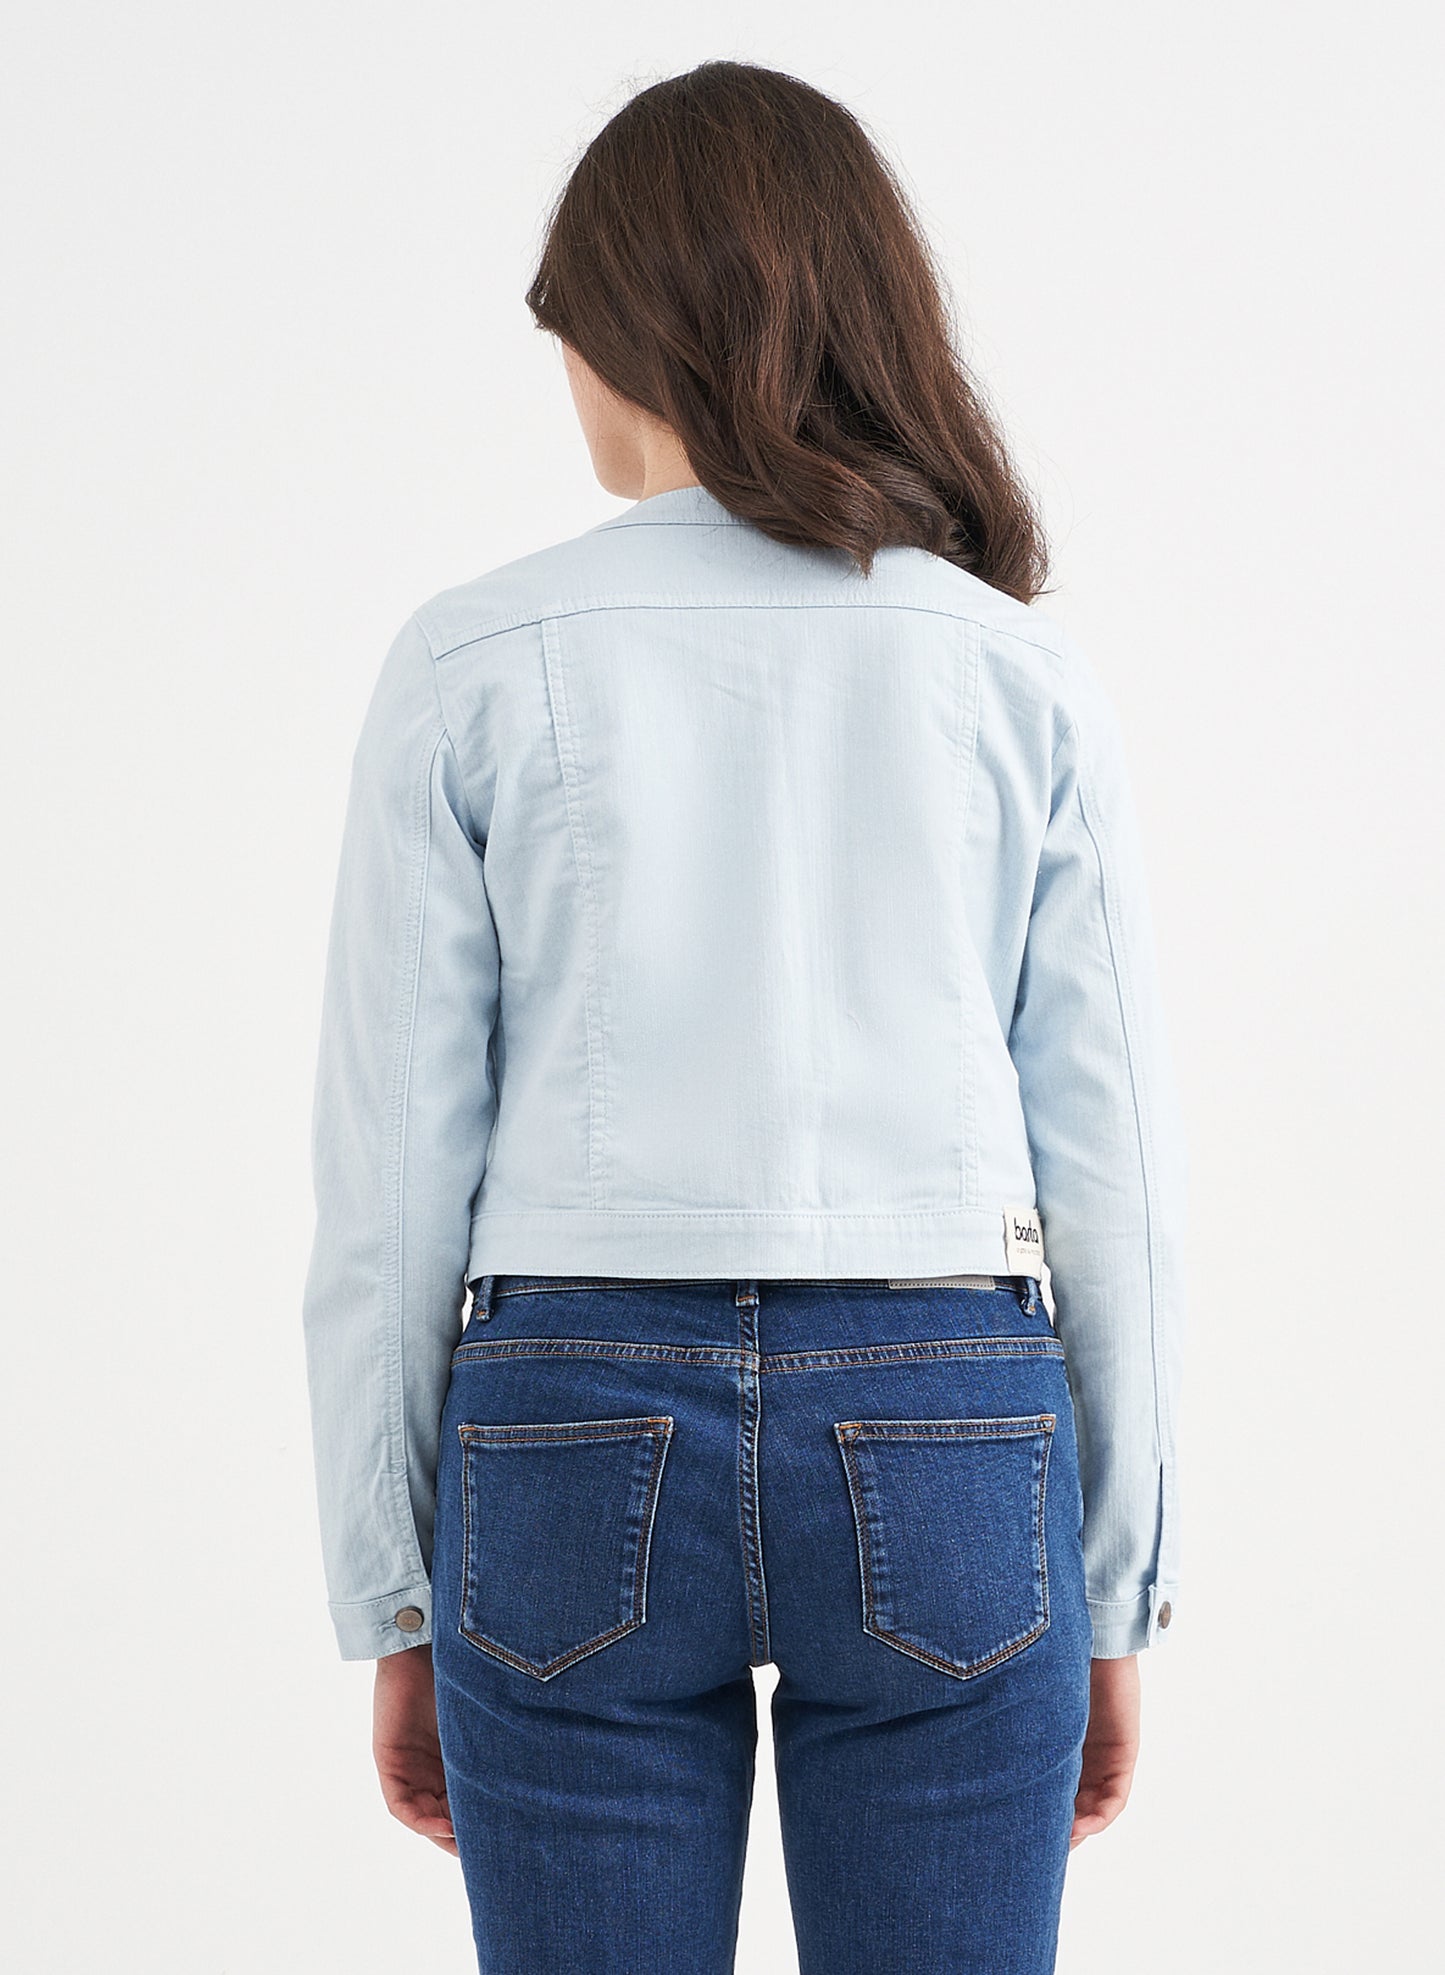 EVA - Bolero Denim Jeans Jacket - Blue Dream